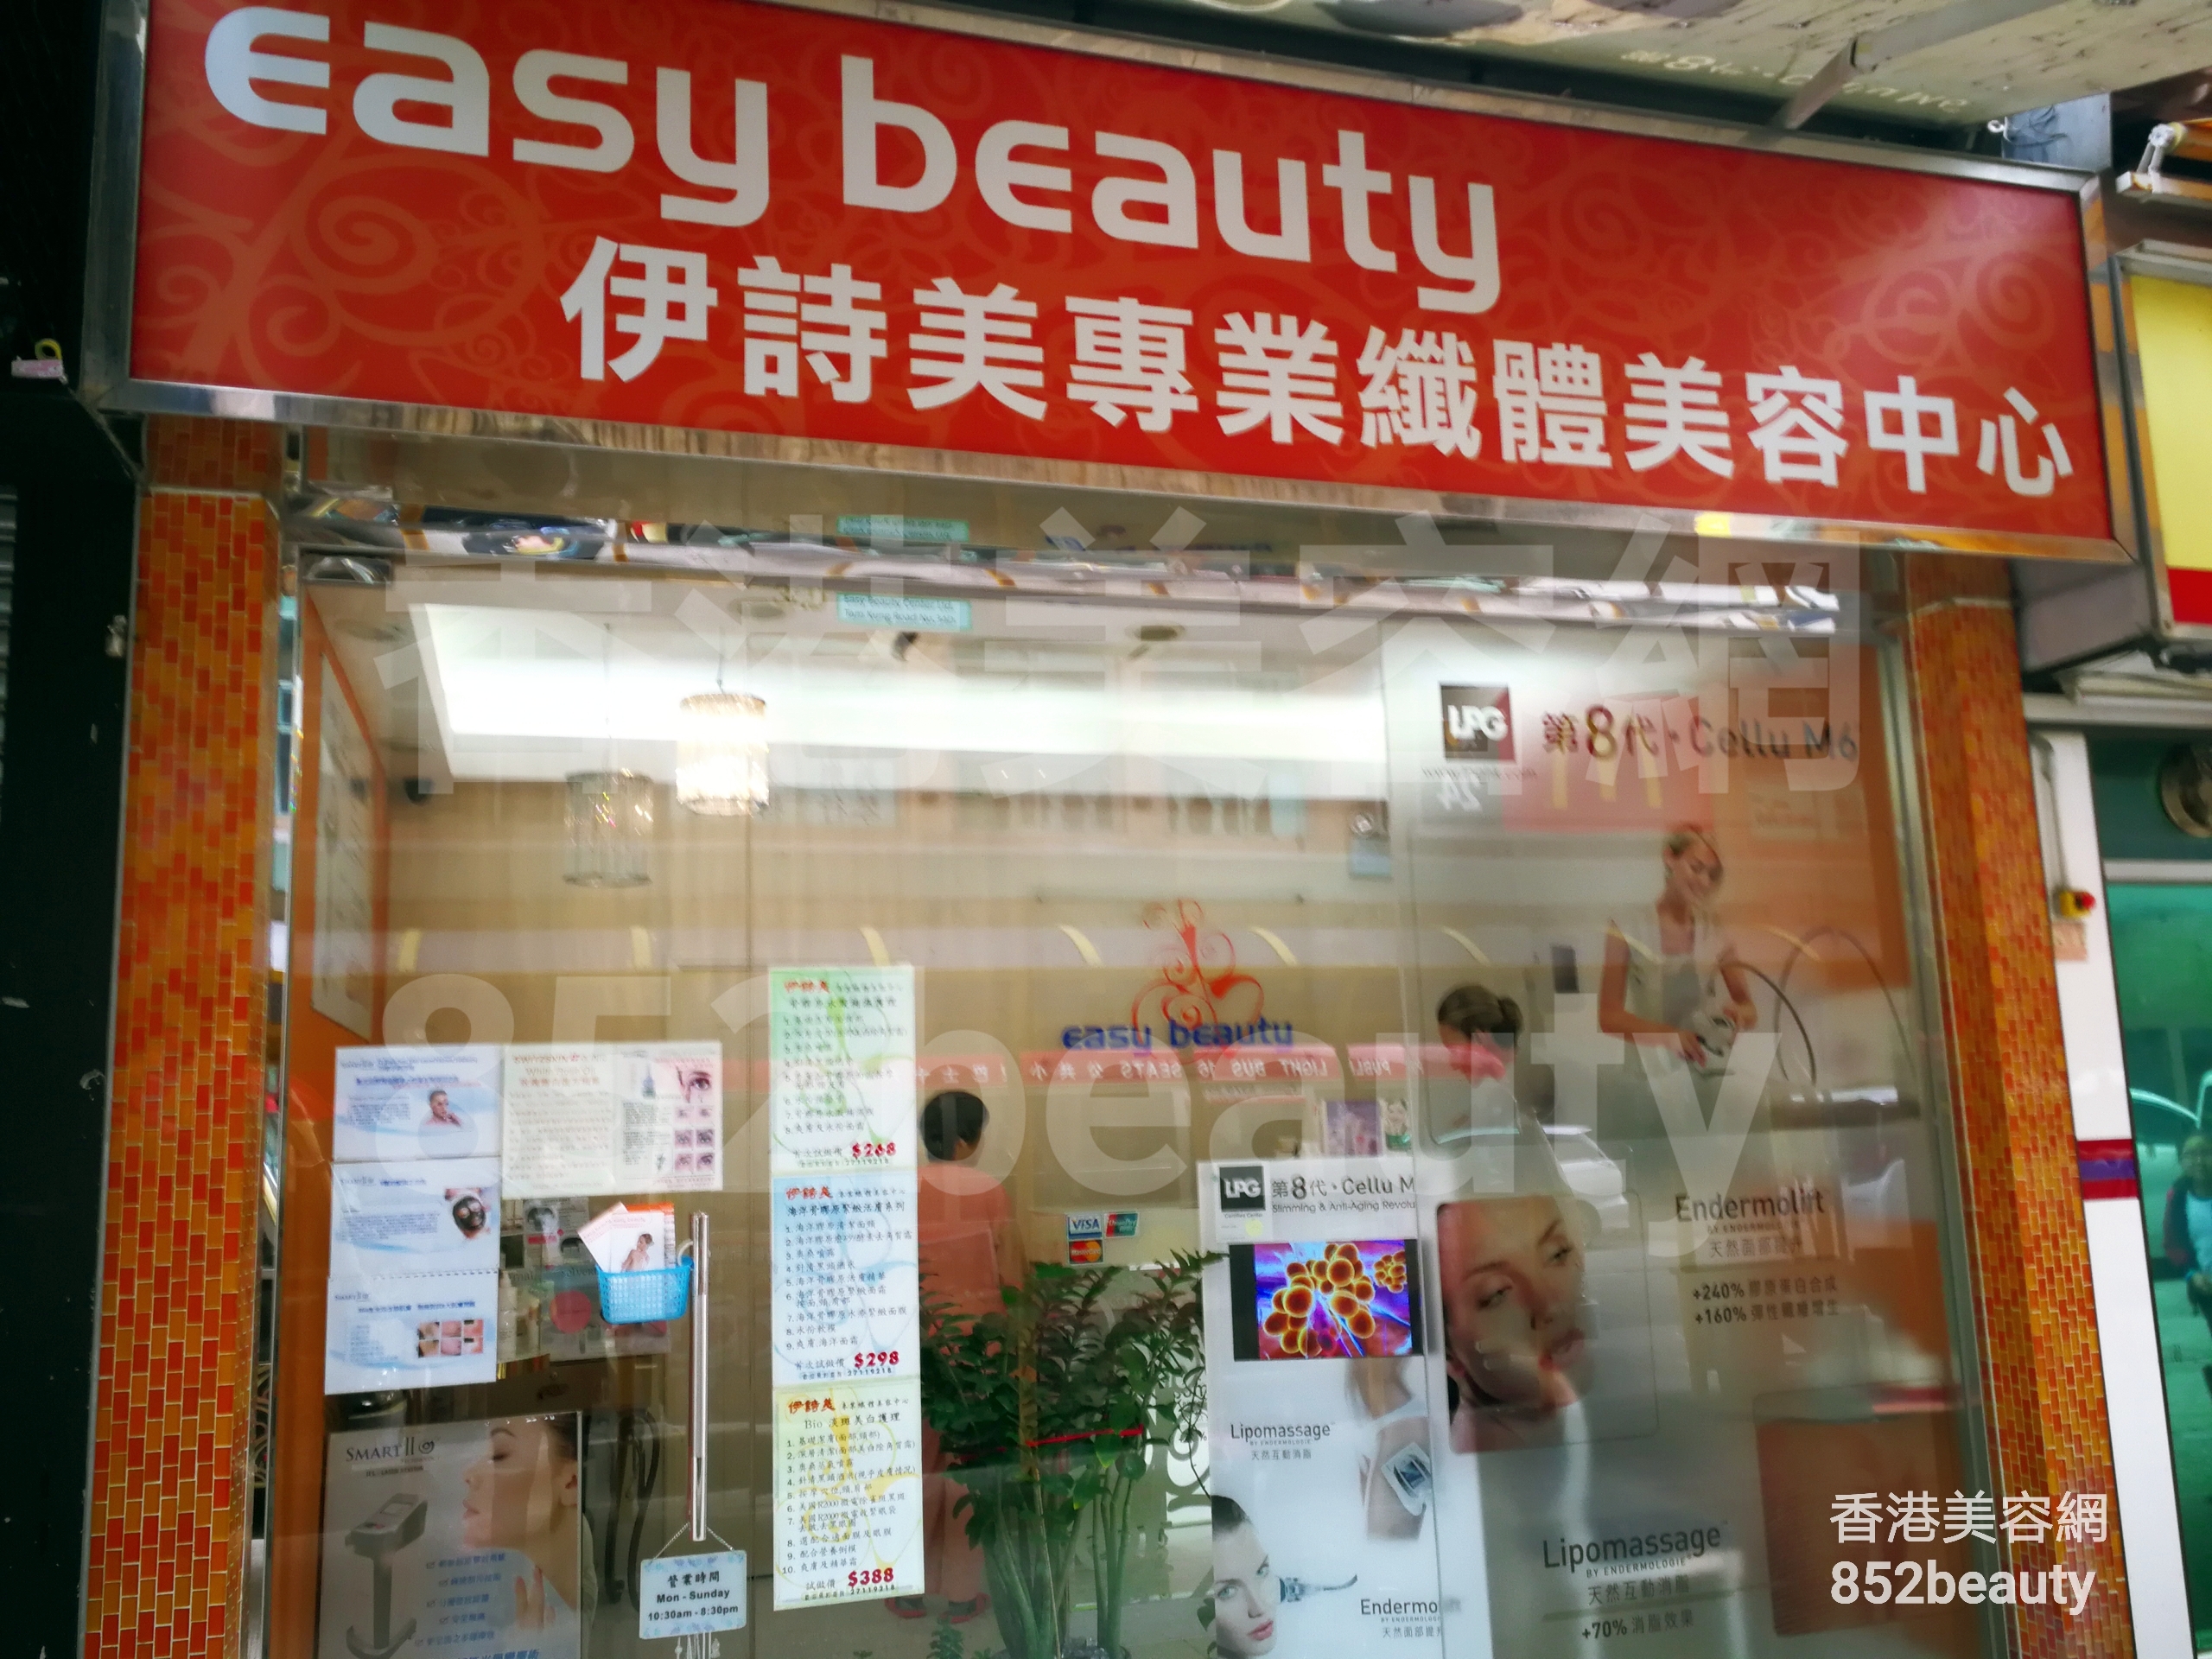 Facial Care: Easy beauty 伊詩美專業纖體美容中心